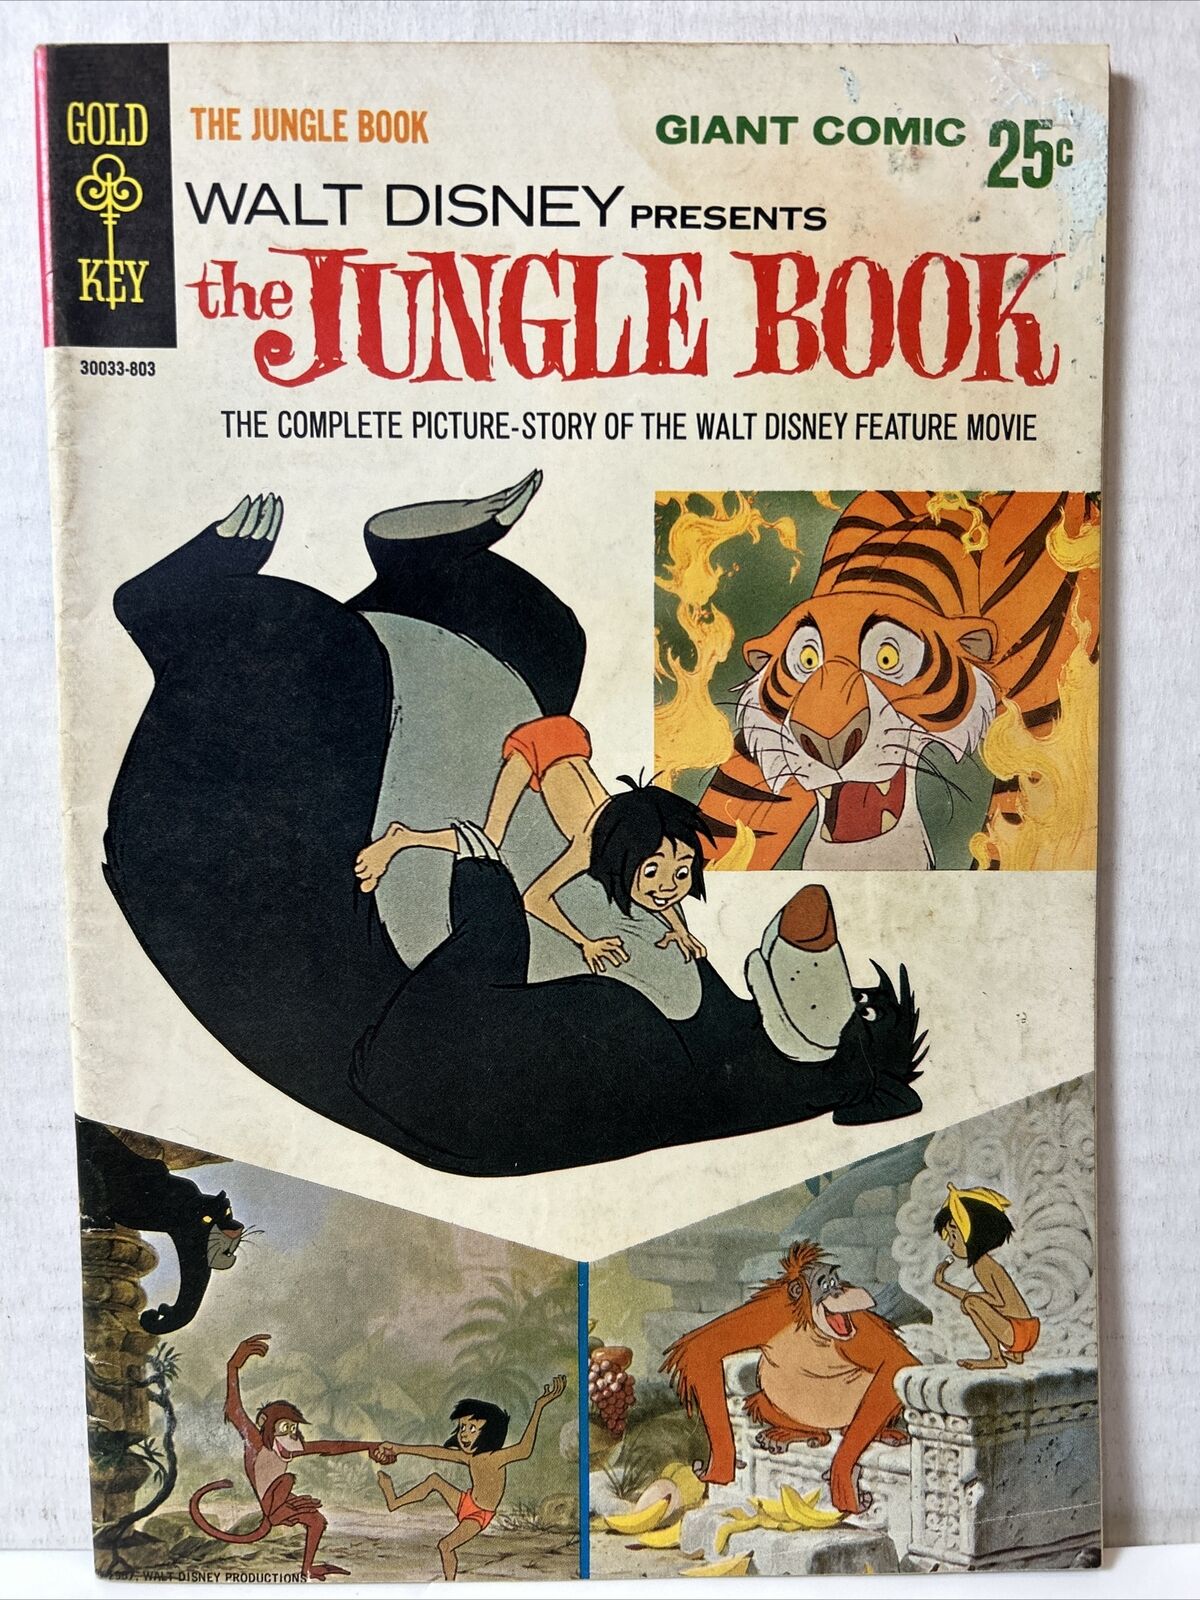 Walt Disney Presents The Jungle Book #1 Gold Key Giant Comic 1966 VG